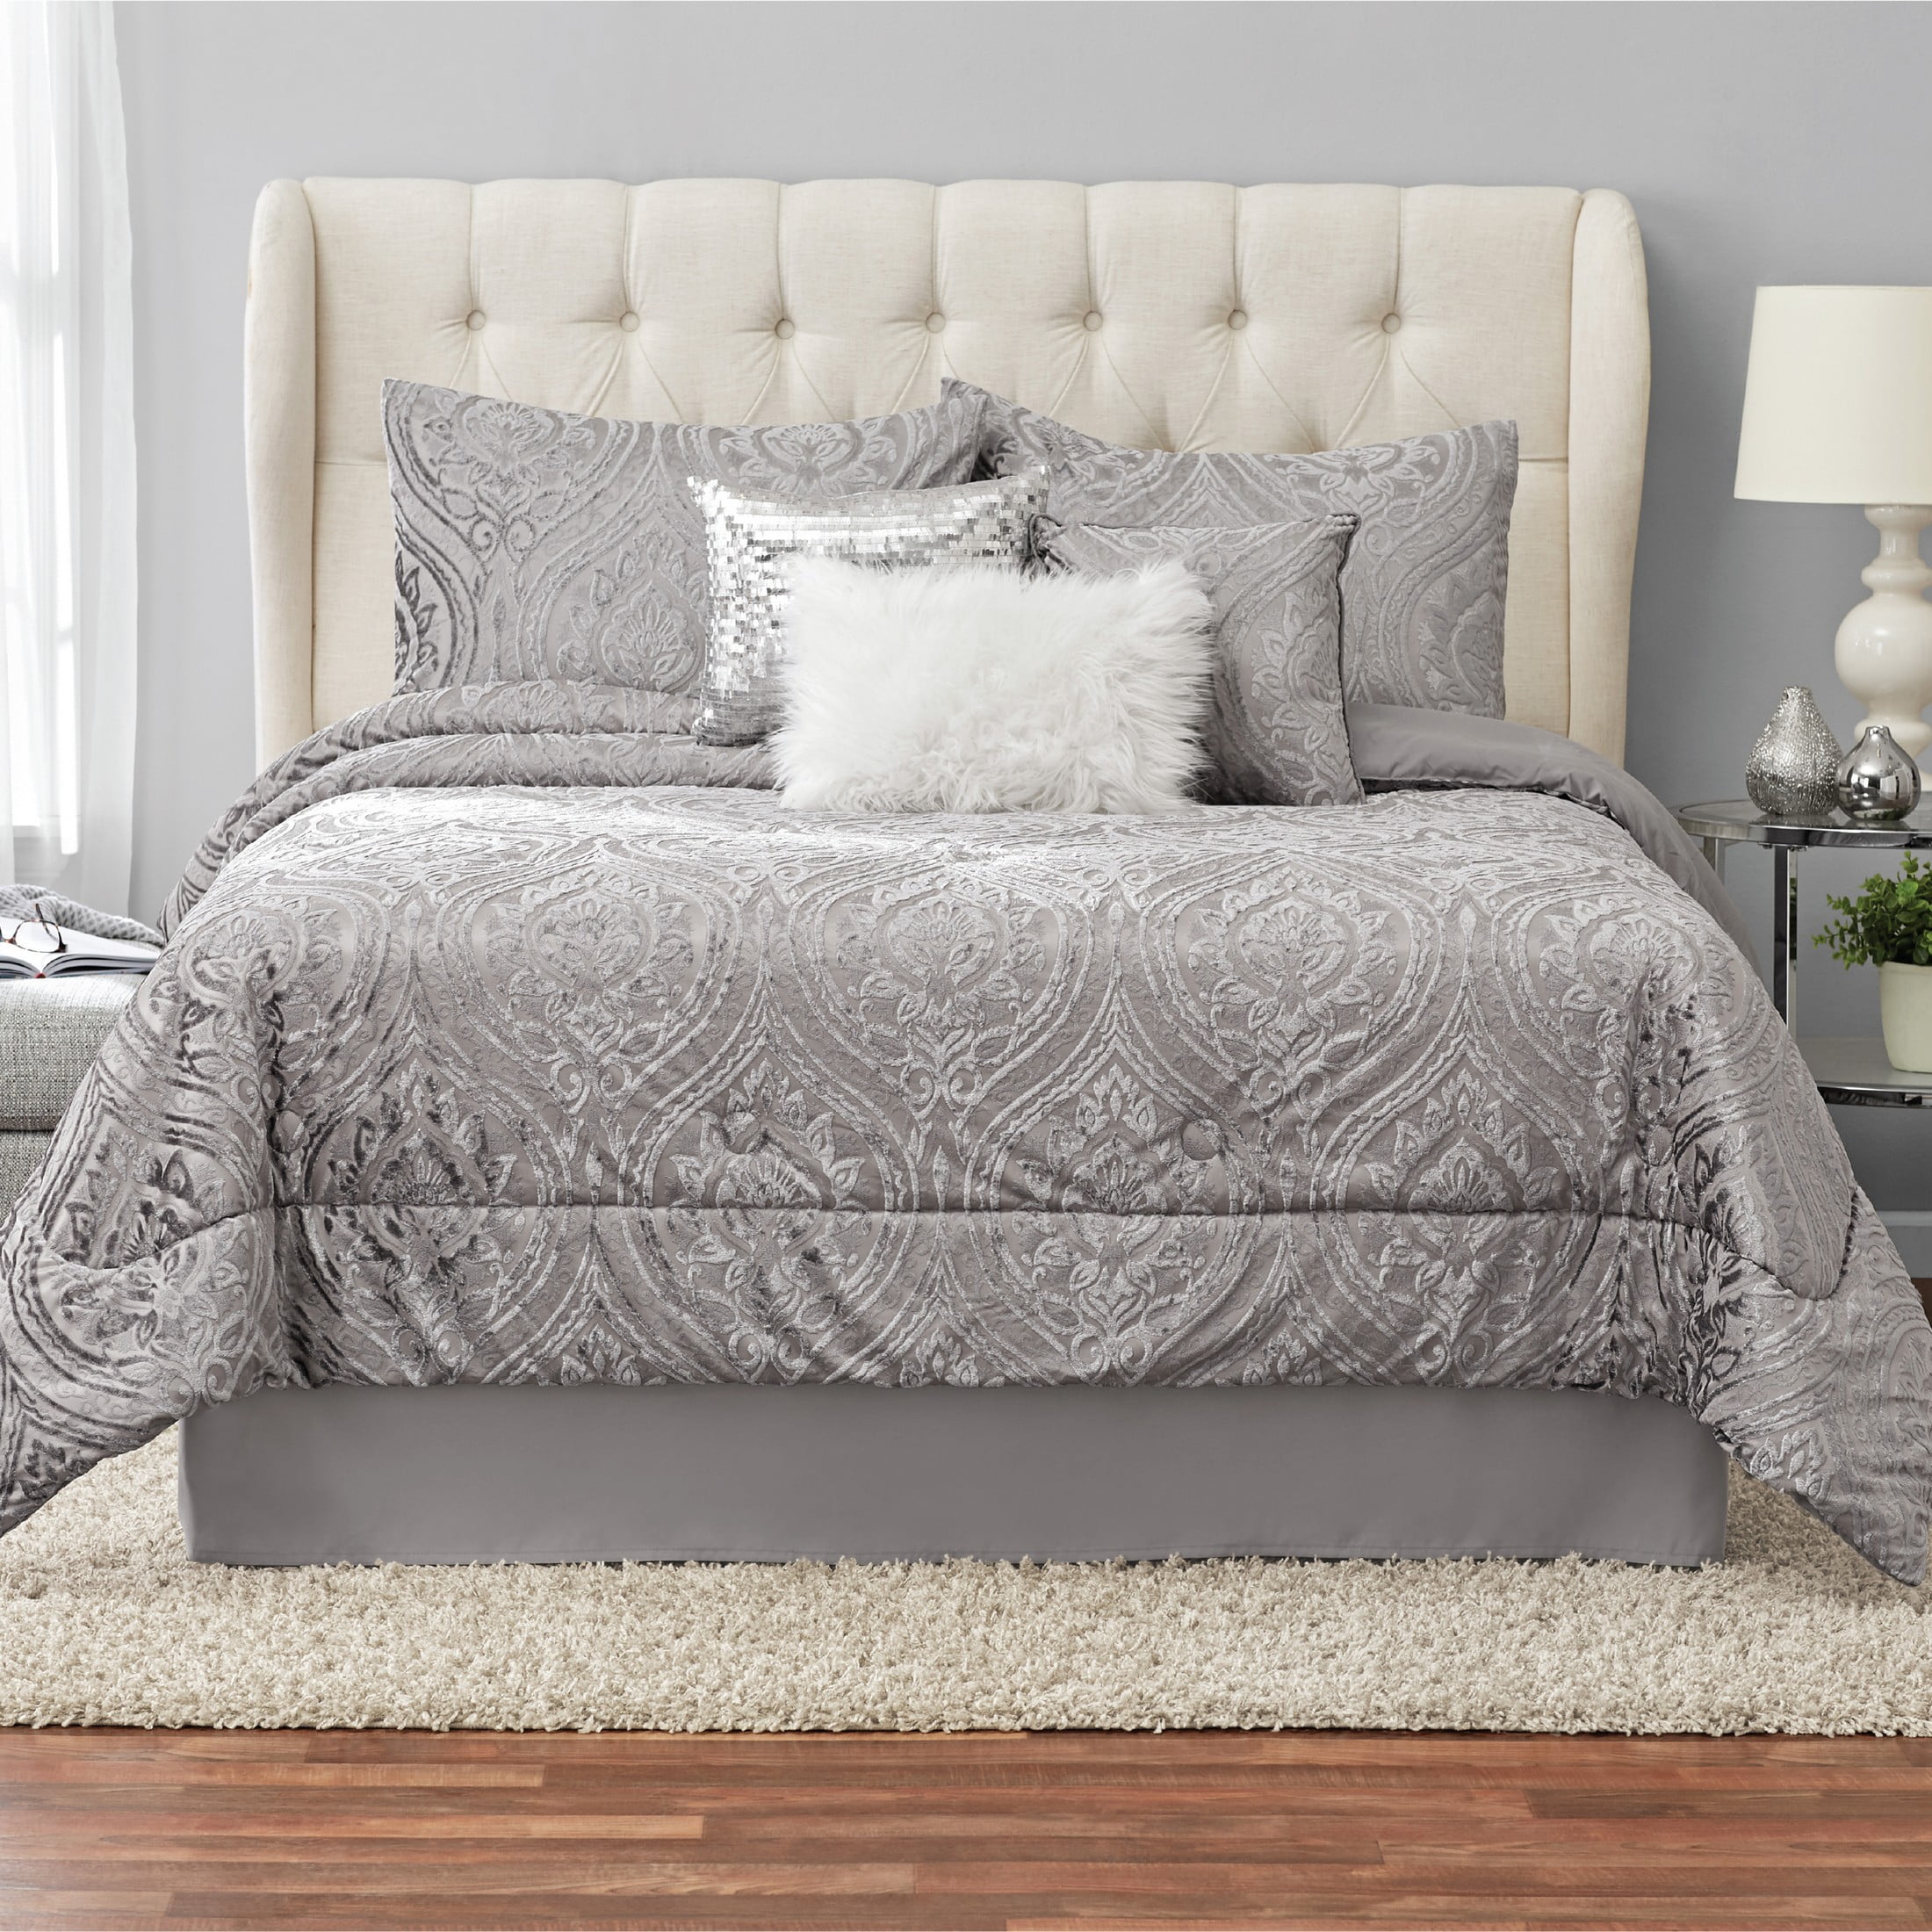 Mainstays Cougar 7-Piece Grey Abstract Woven Comforter Set, Full/Queen - Walmart.com